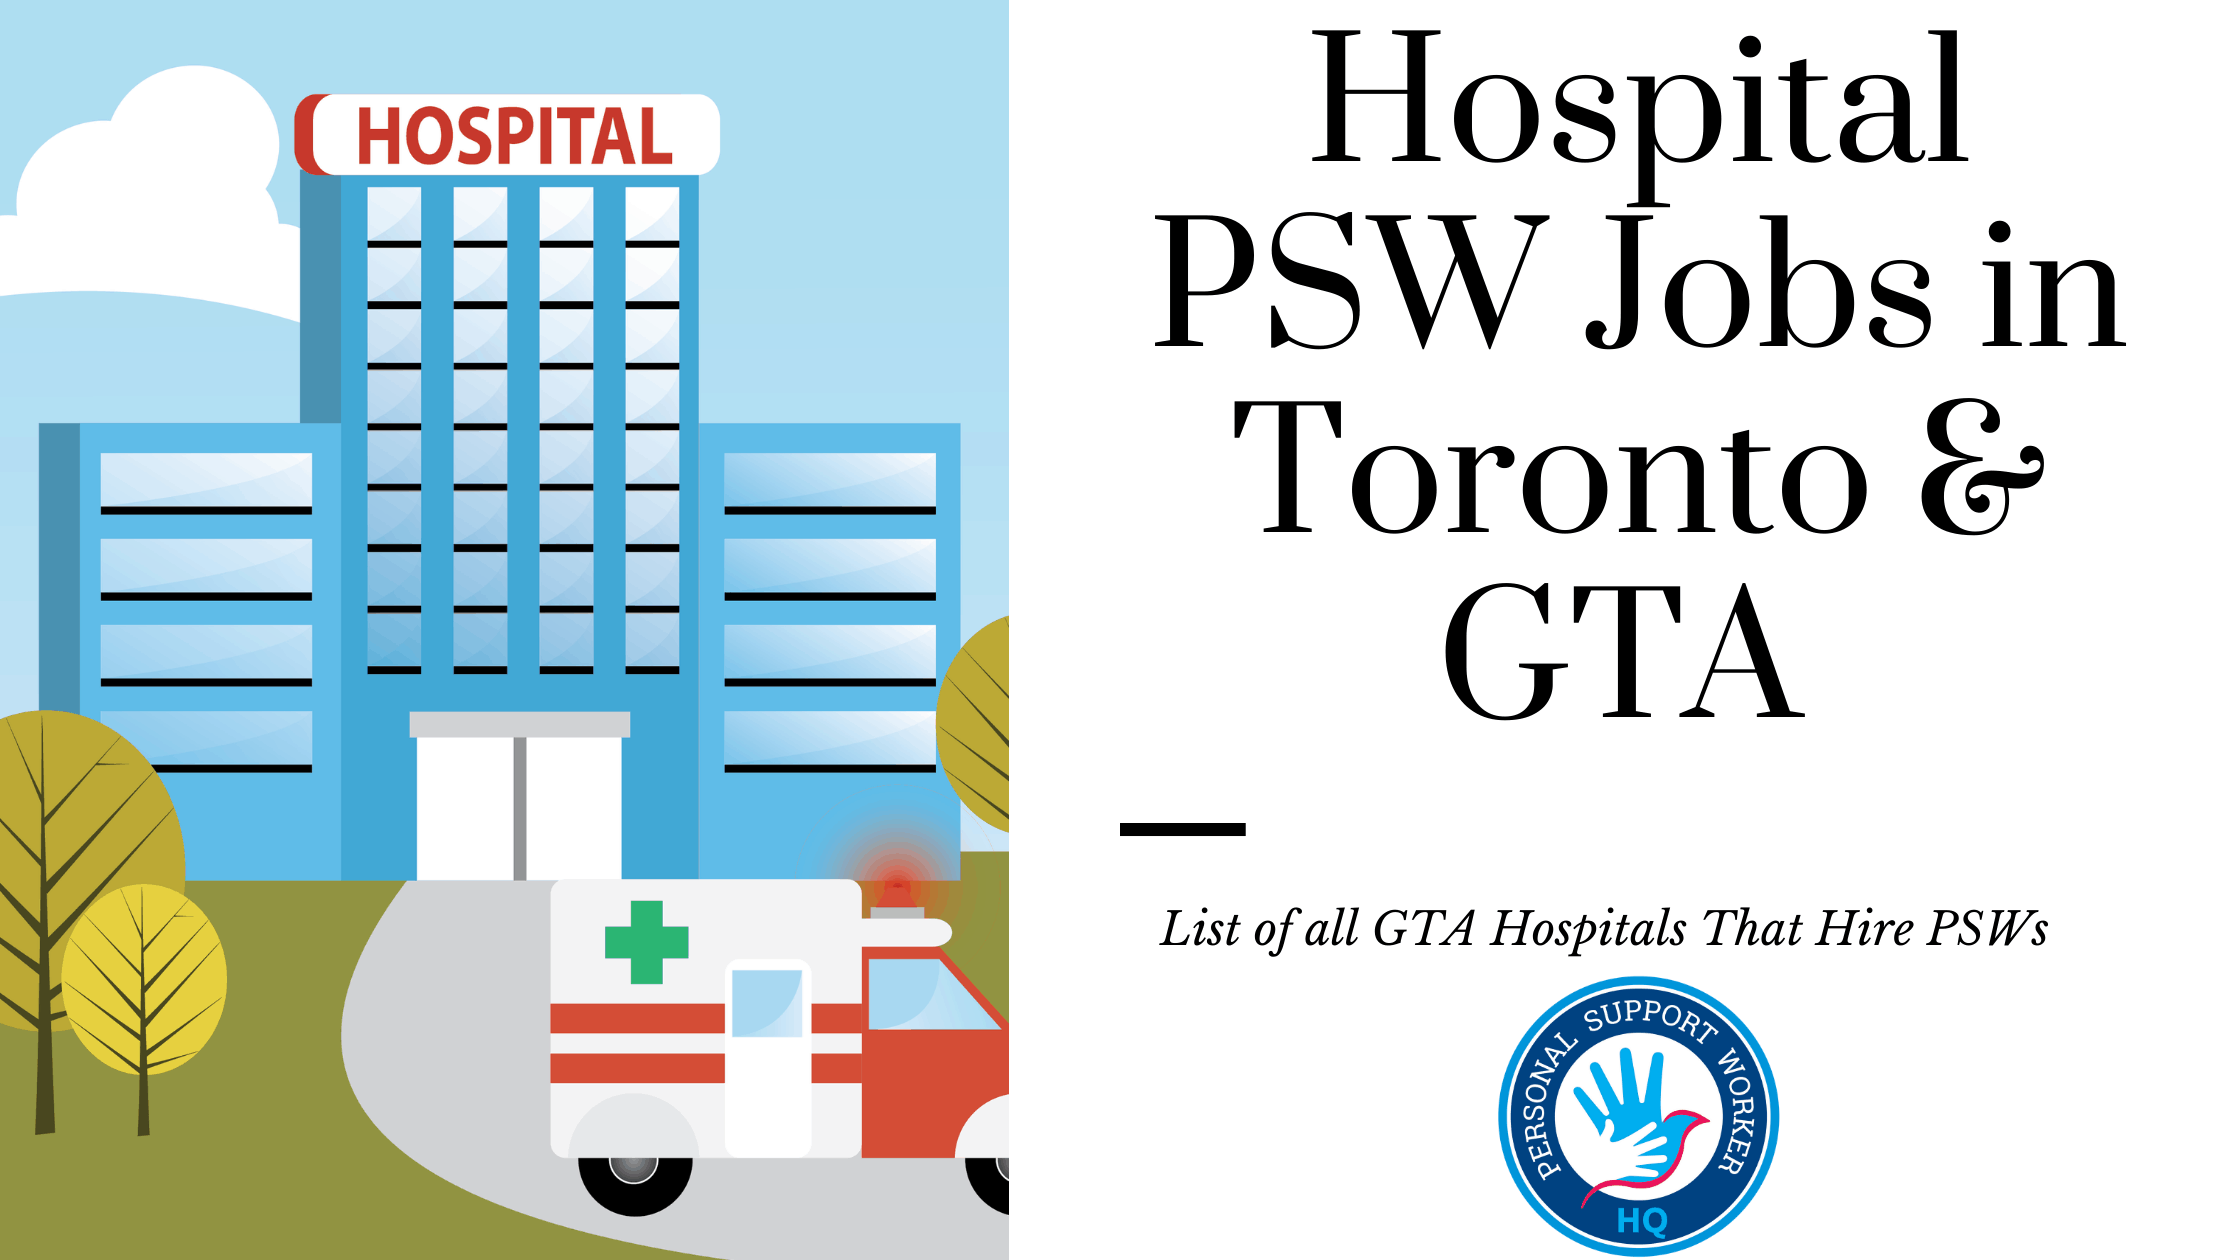 Hospital PSW Jobs in Toronto